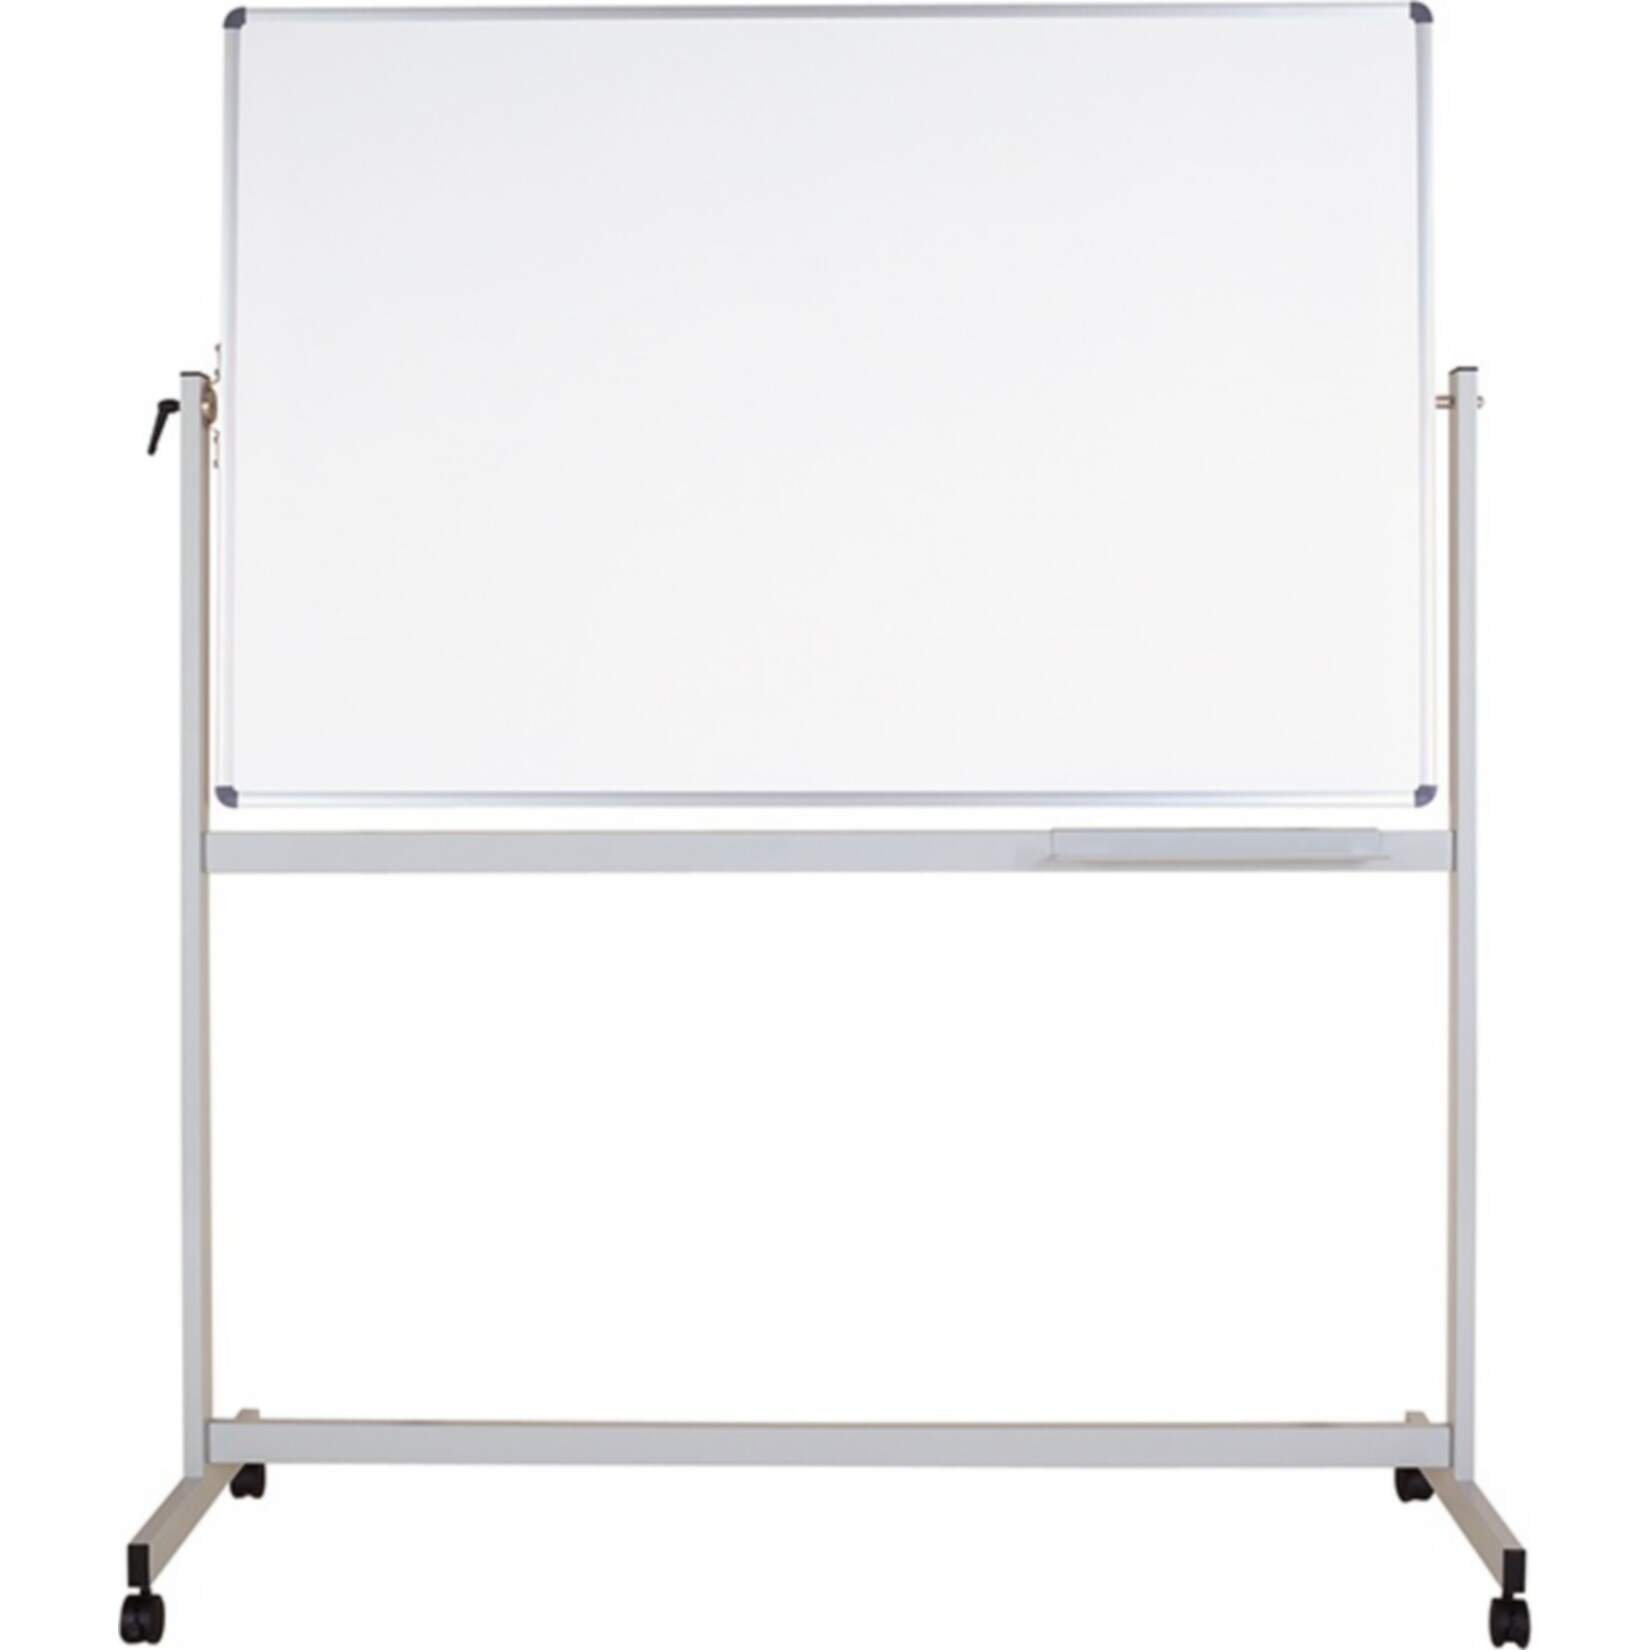 MAUL Mobiles Whiteboard MAULstandard, drehbar - 100 x 150 cm